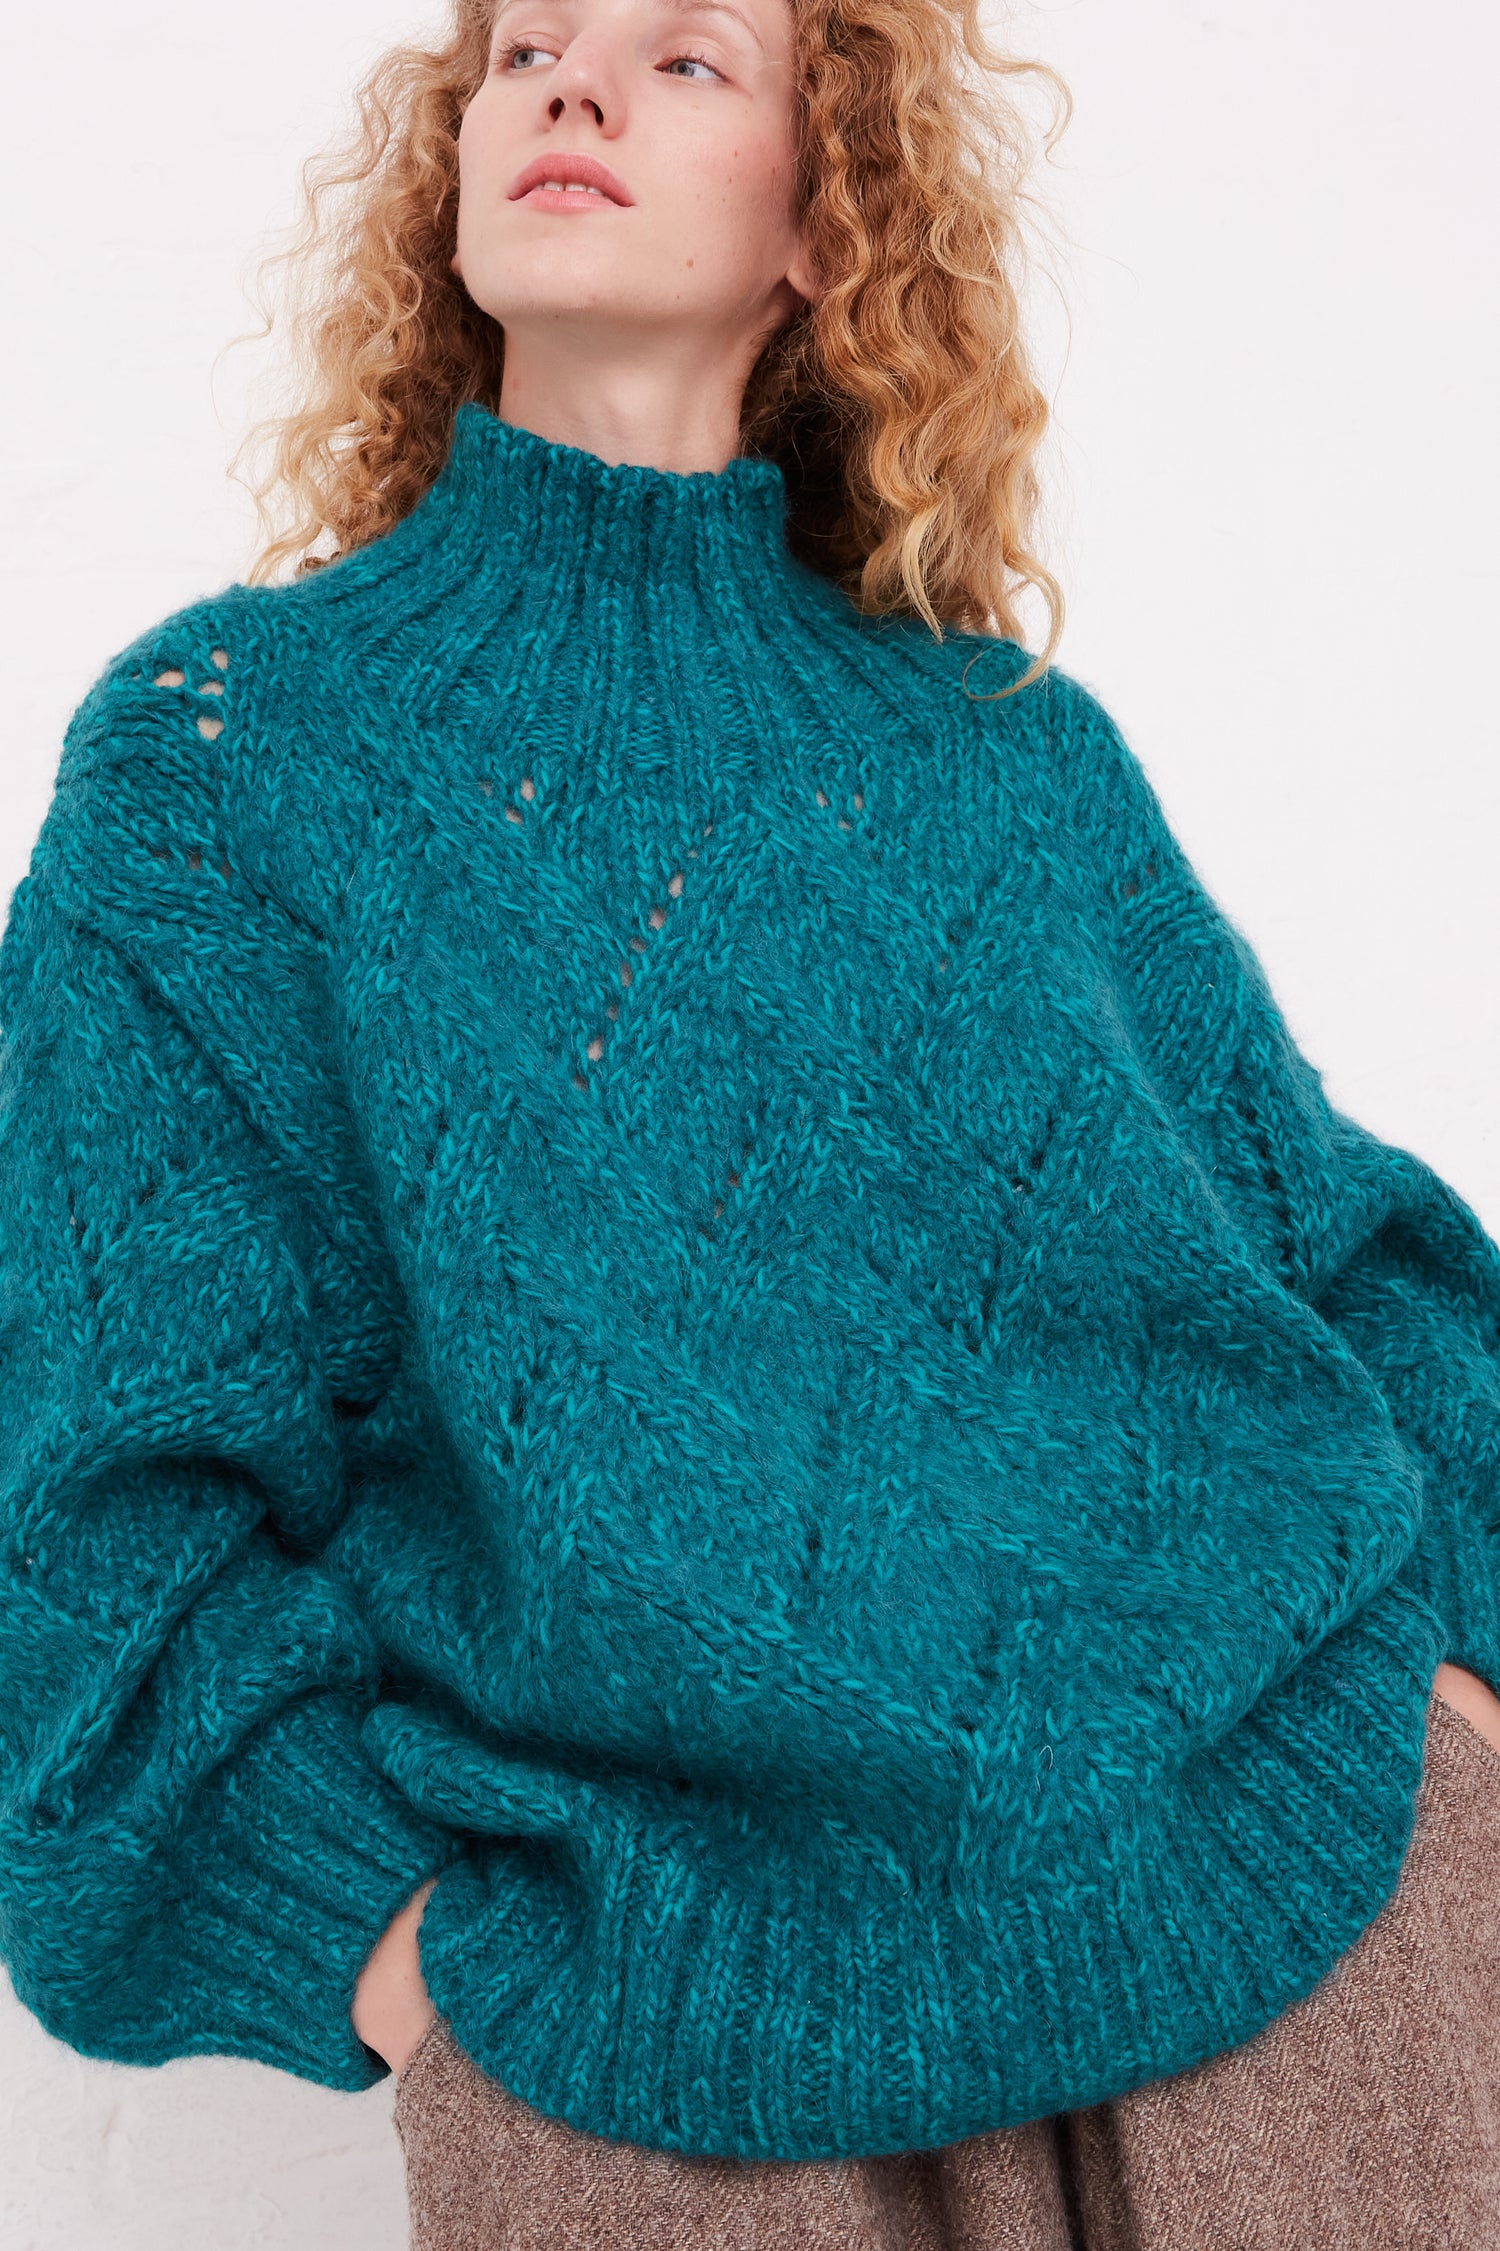 D-Ring Turtleneck Sweater - Ready to Wear